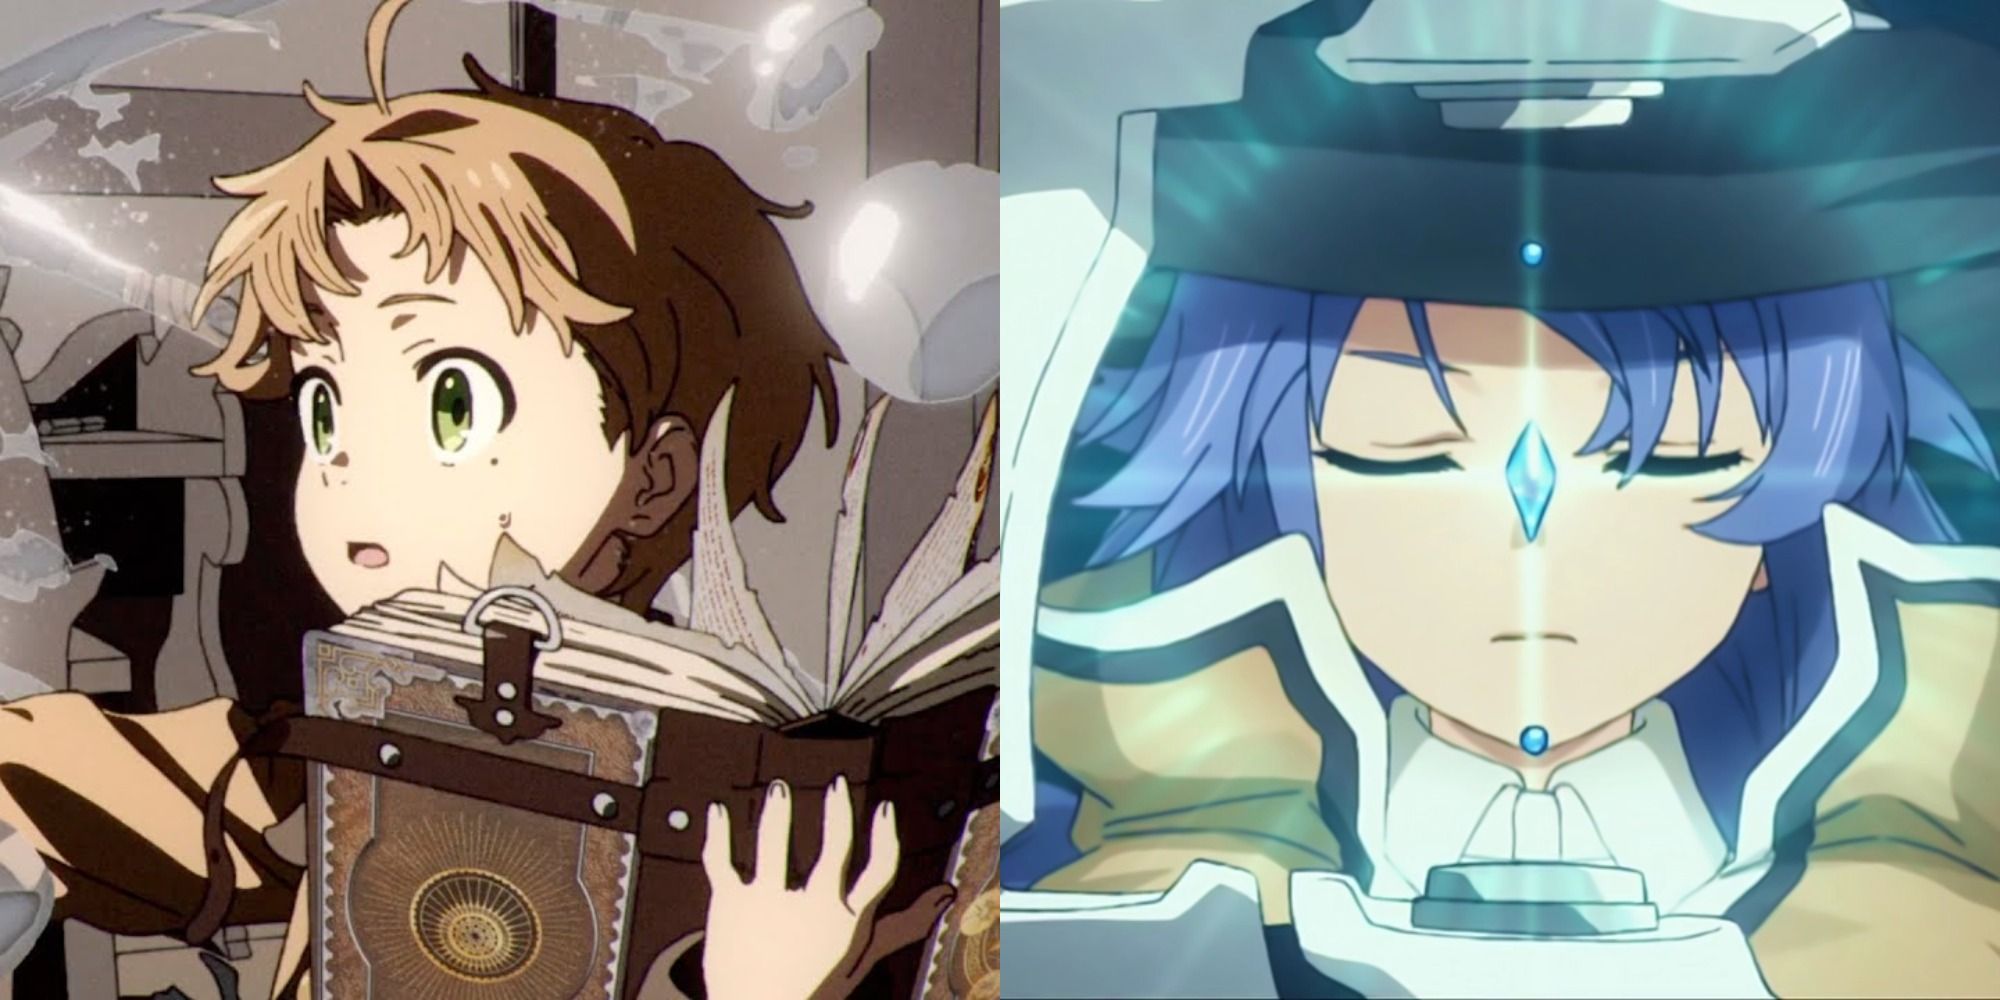 Split image showing Rudeus and Roxy in Mushoku Tensei Jobless Reincarnation.